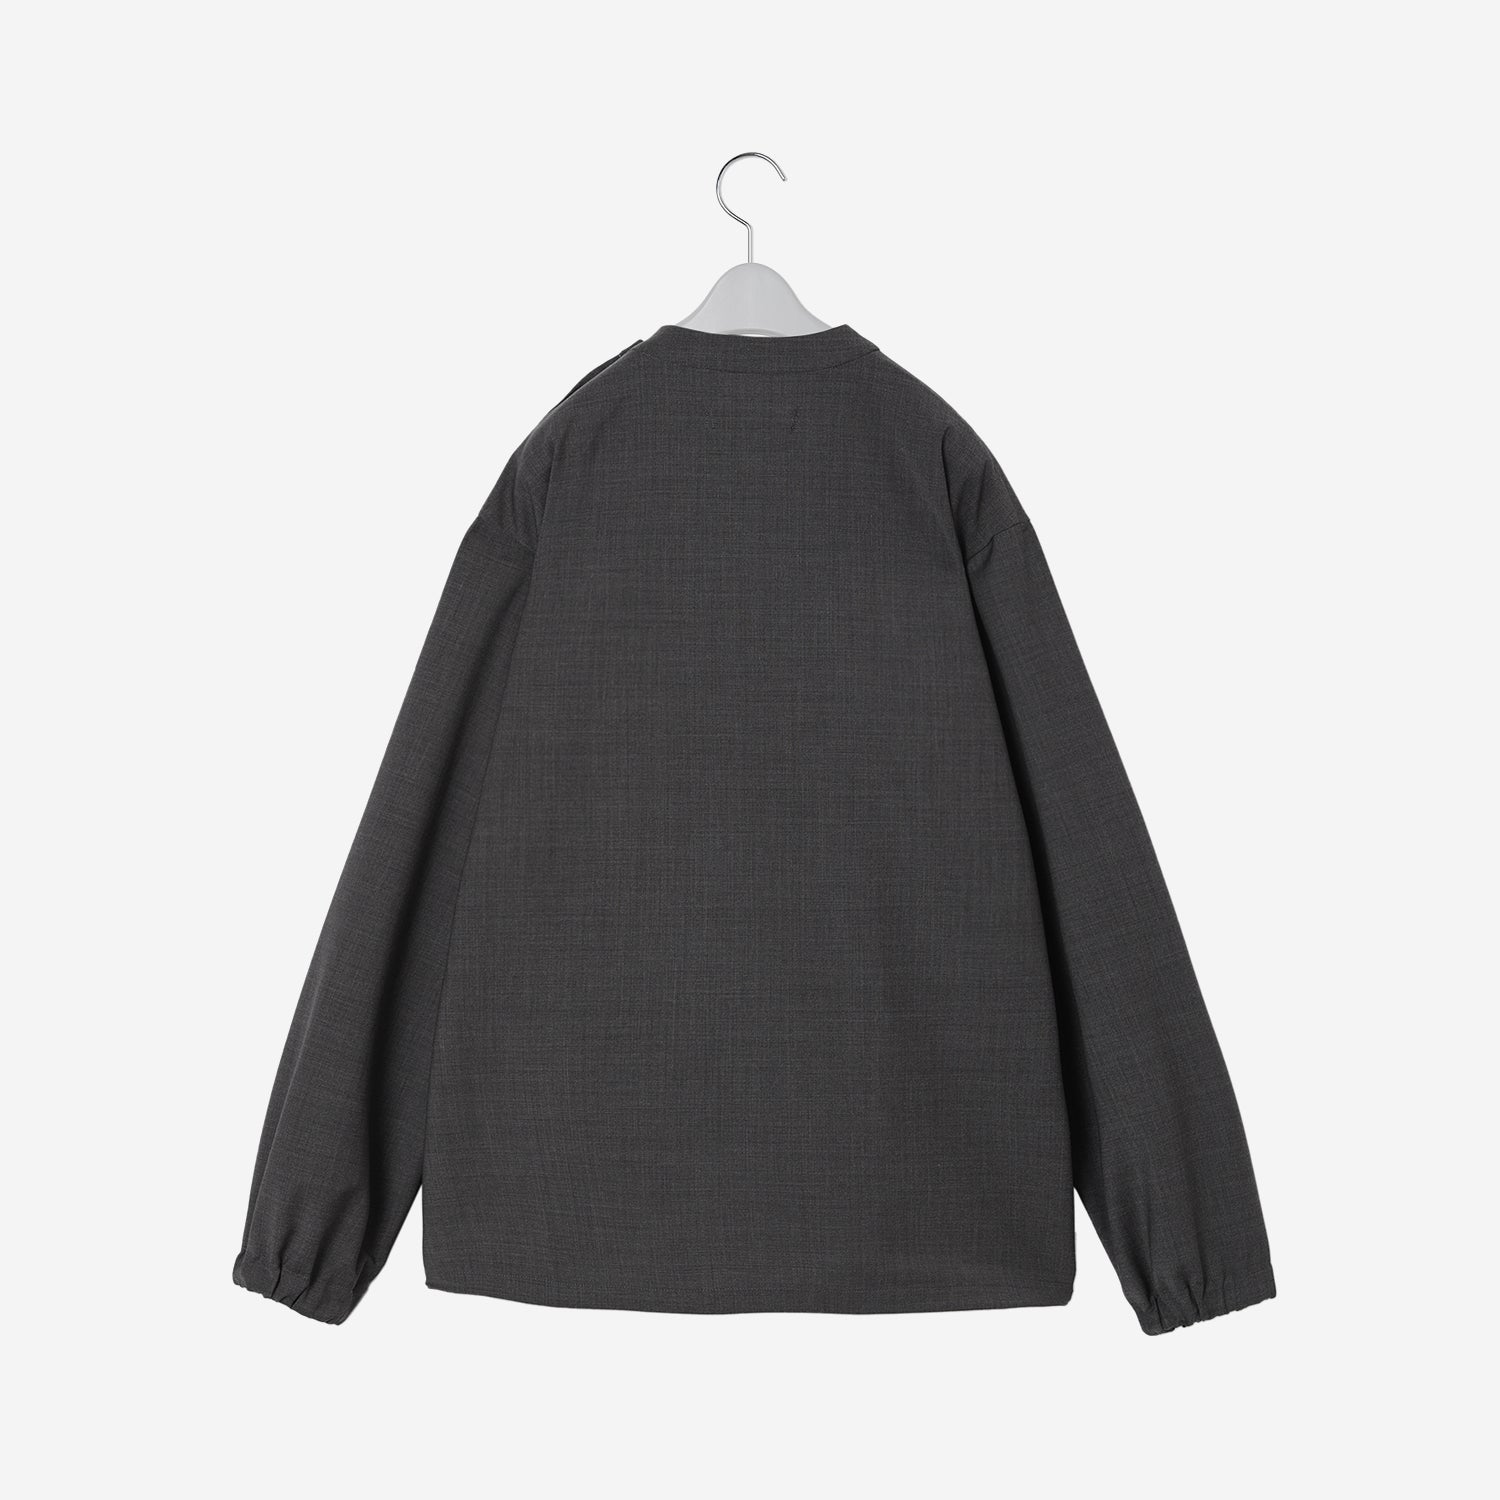 Mockneck Long Sleeve Top / gray